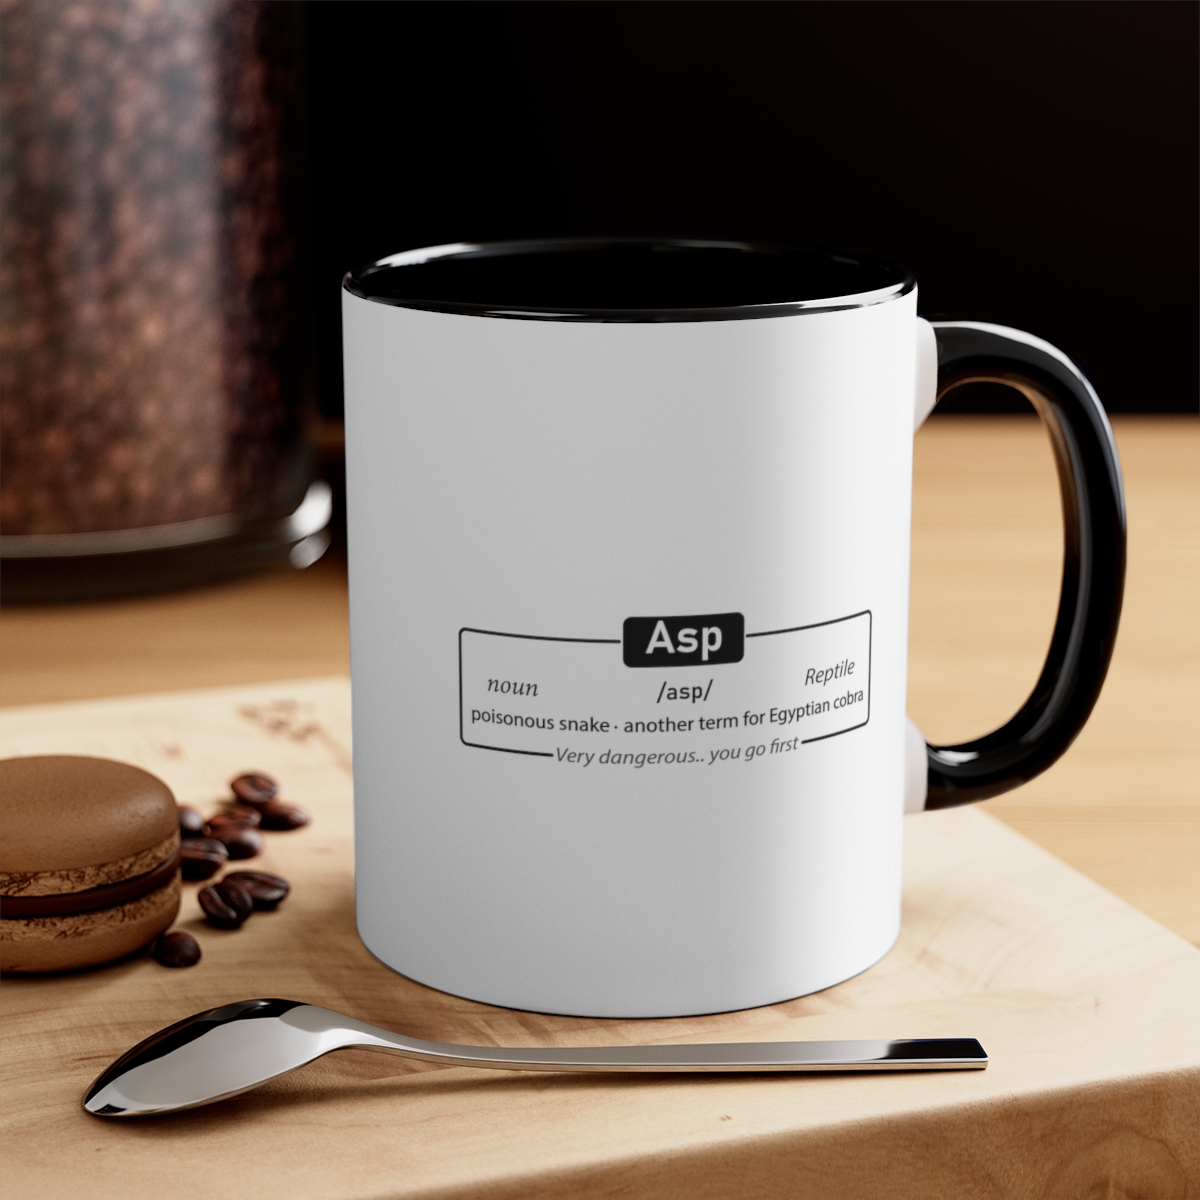 Asp - Accent Coffee Mug, 11oz